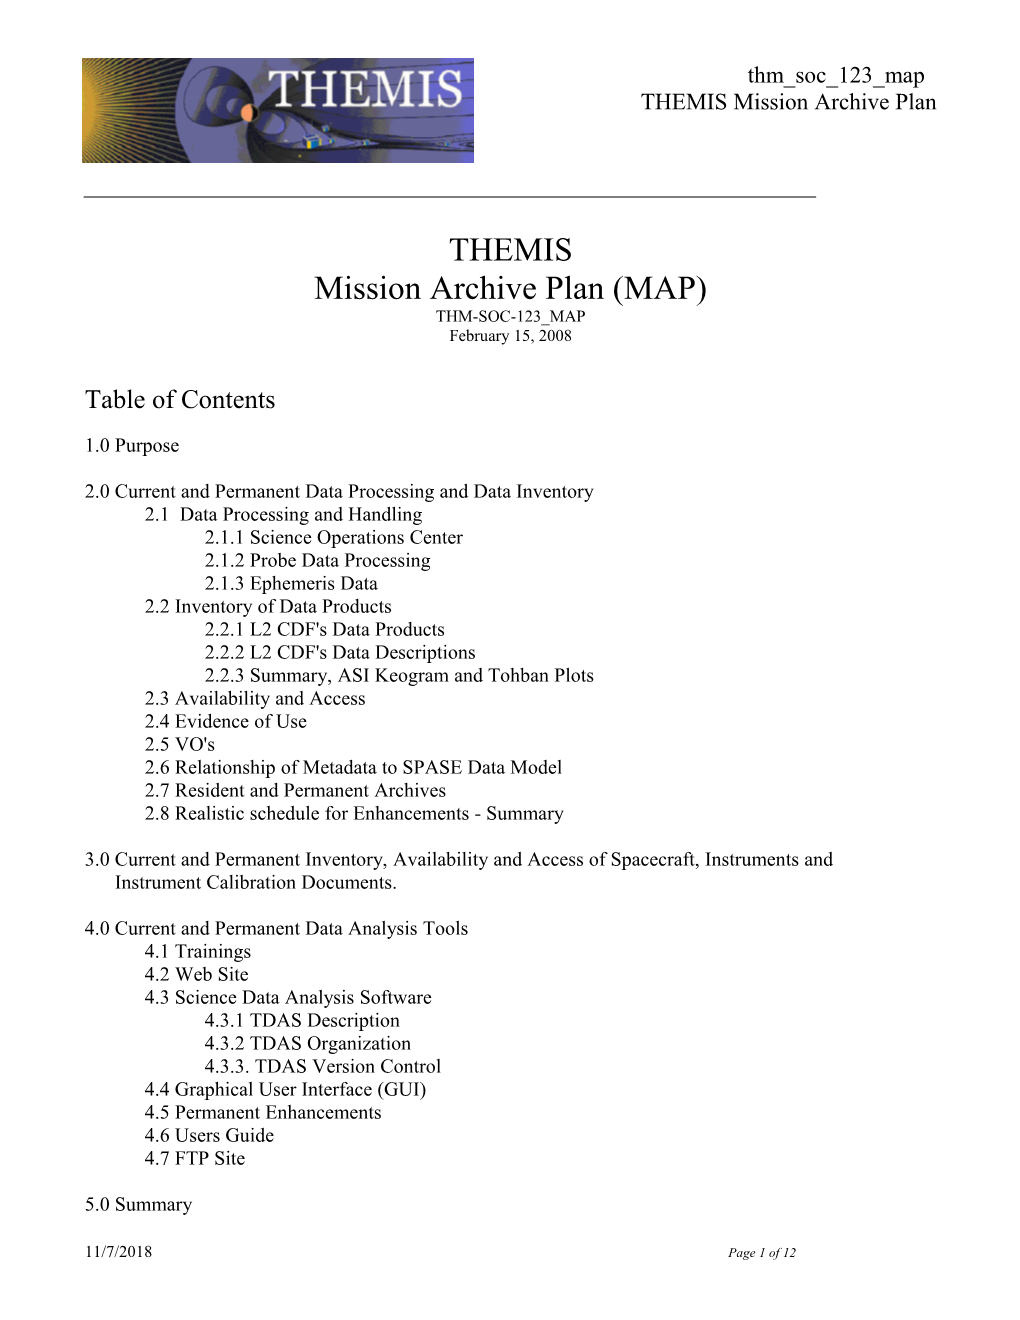 THEMIS Mission Archive Plan